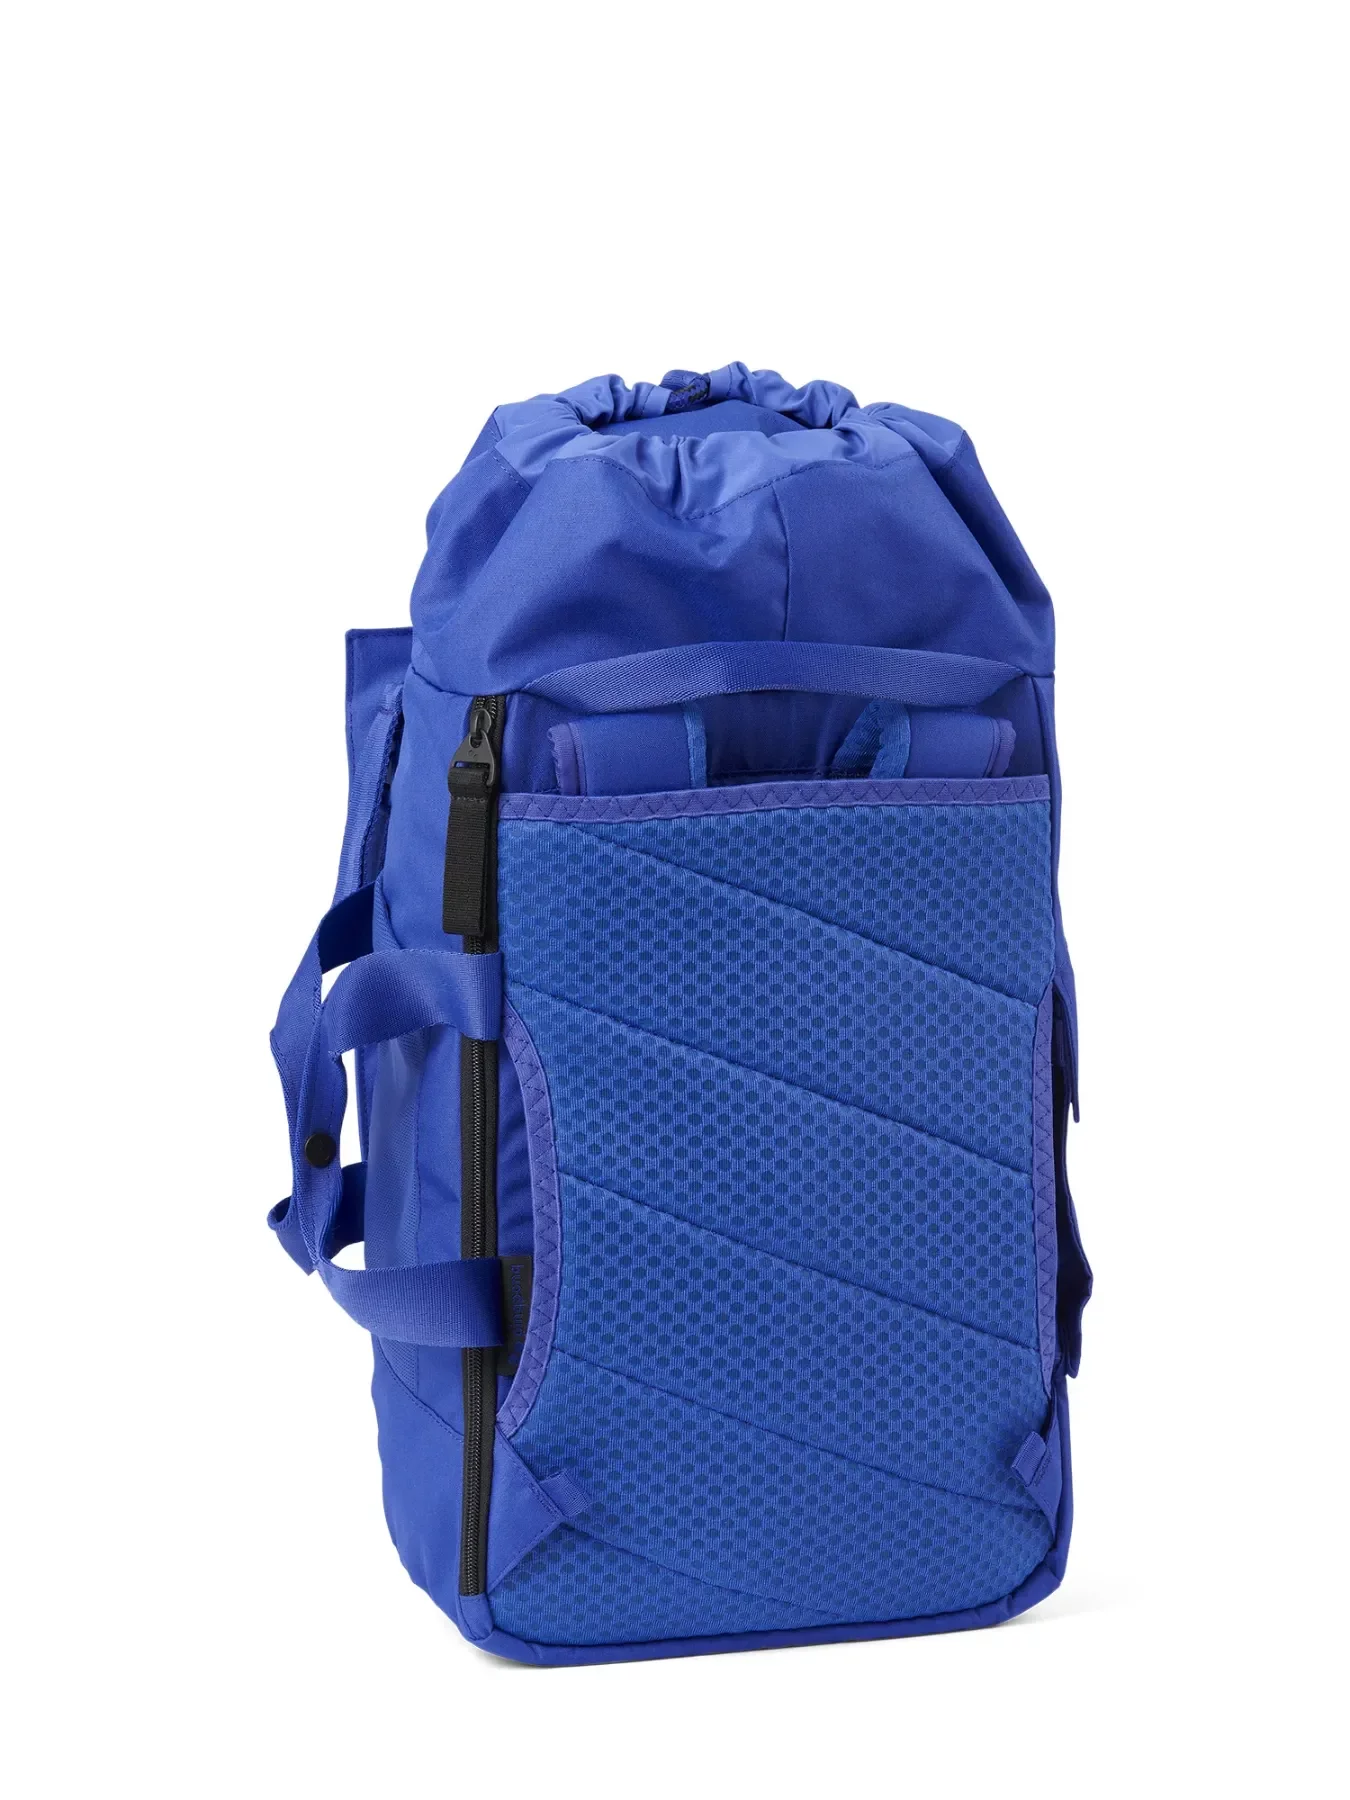 pinqponq Backpack BLOK medium Construct - Poppy Blue 6